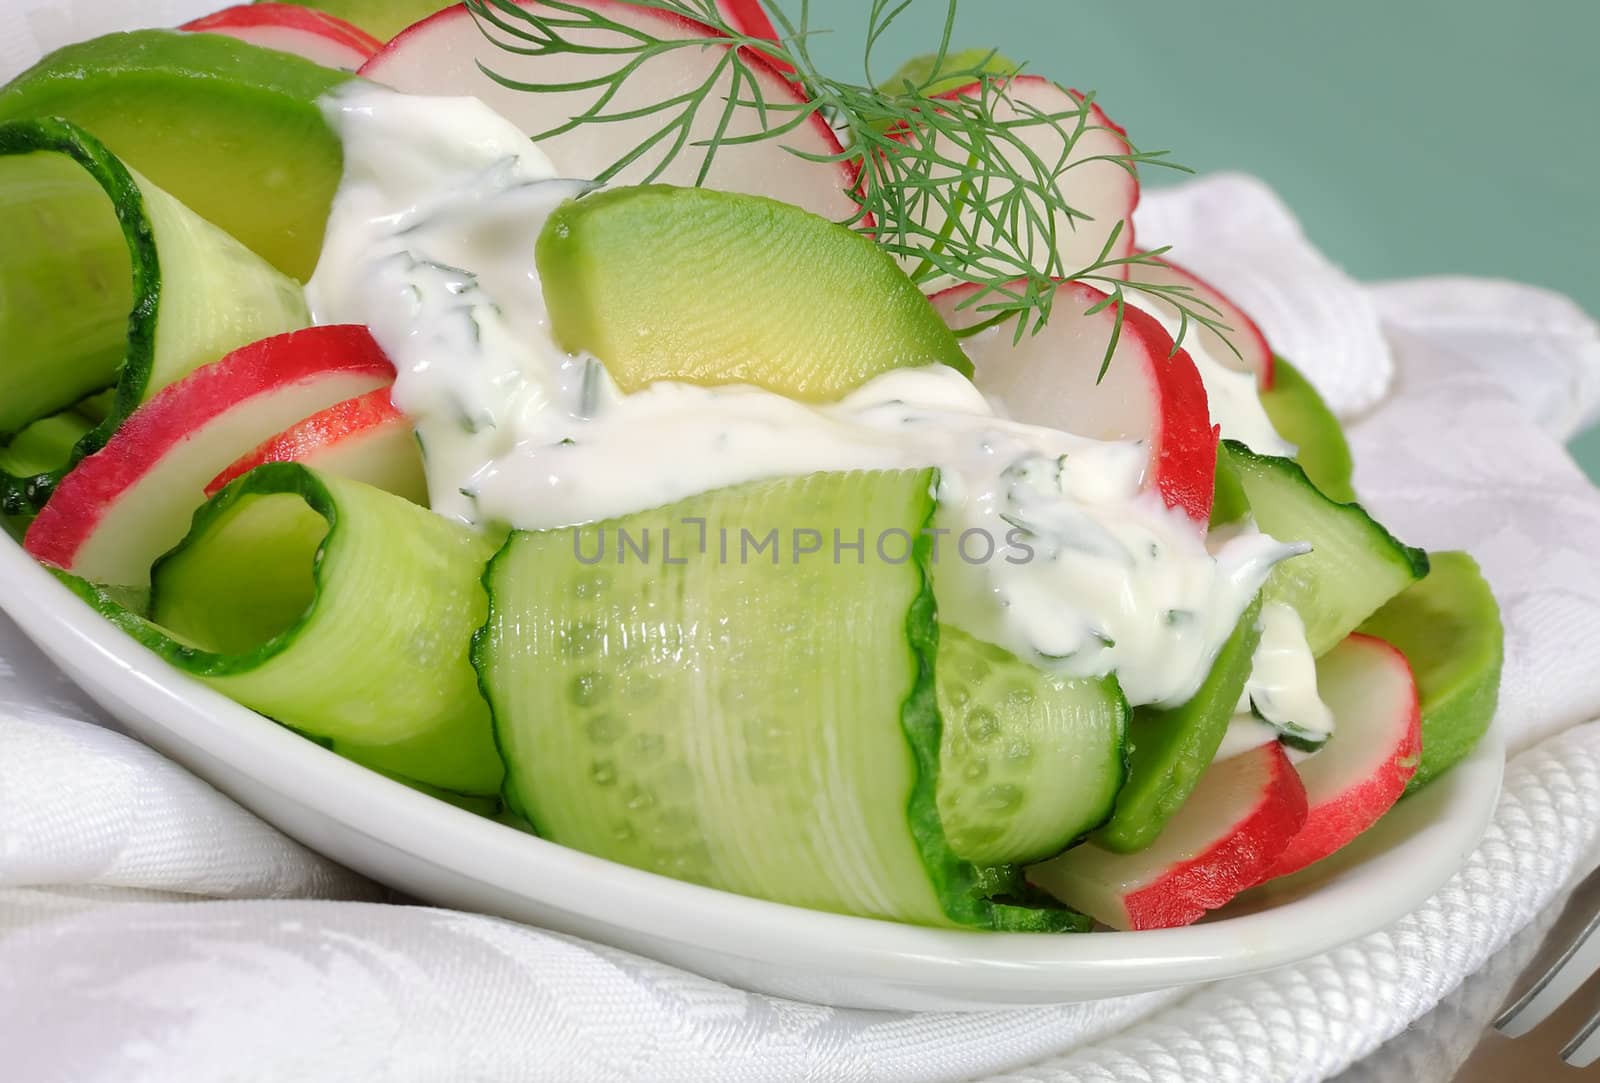 Cucumber salad with radish and avocado cream sauce by Apolonia